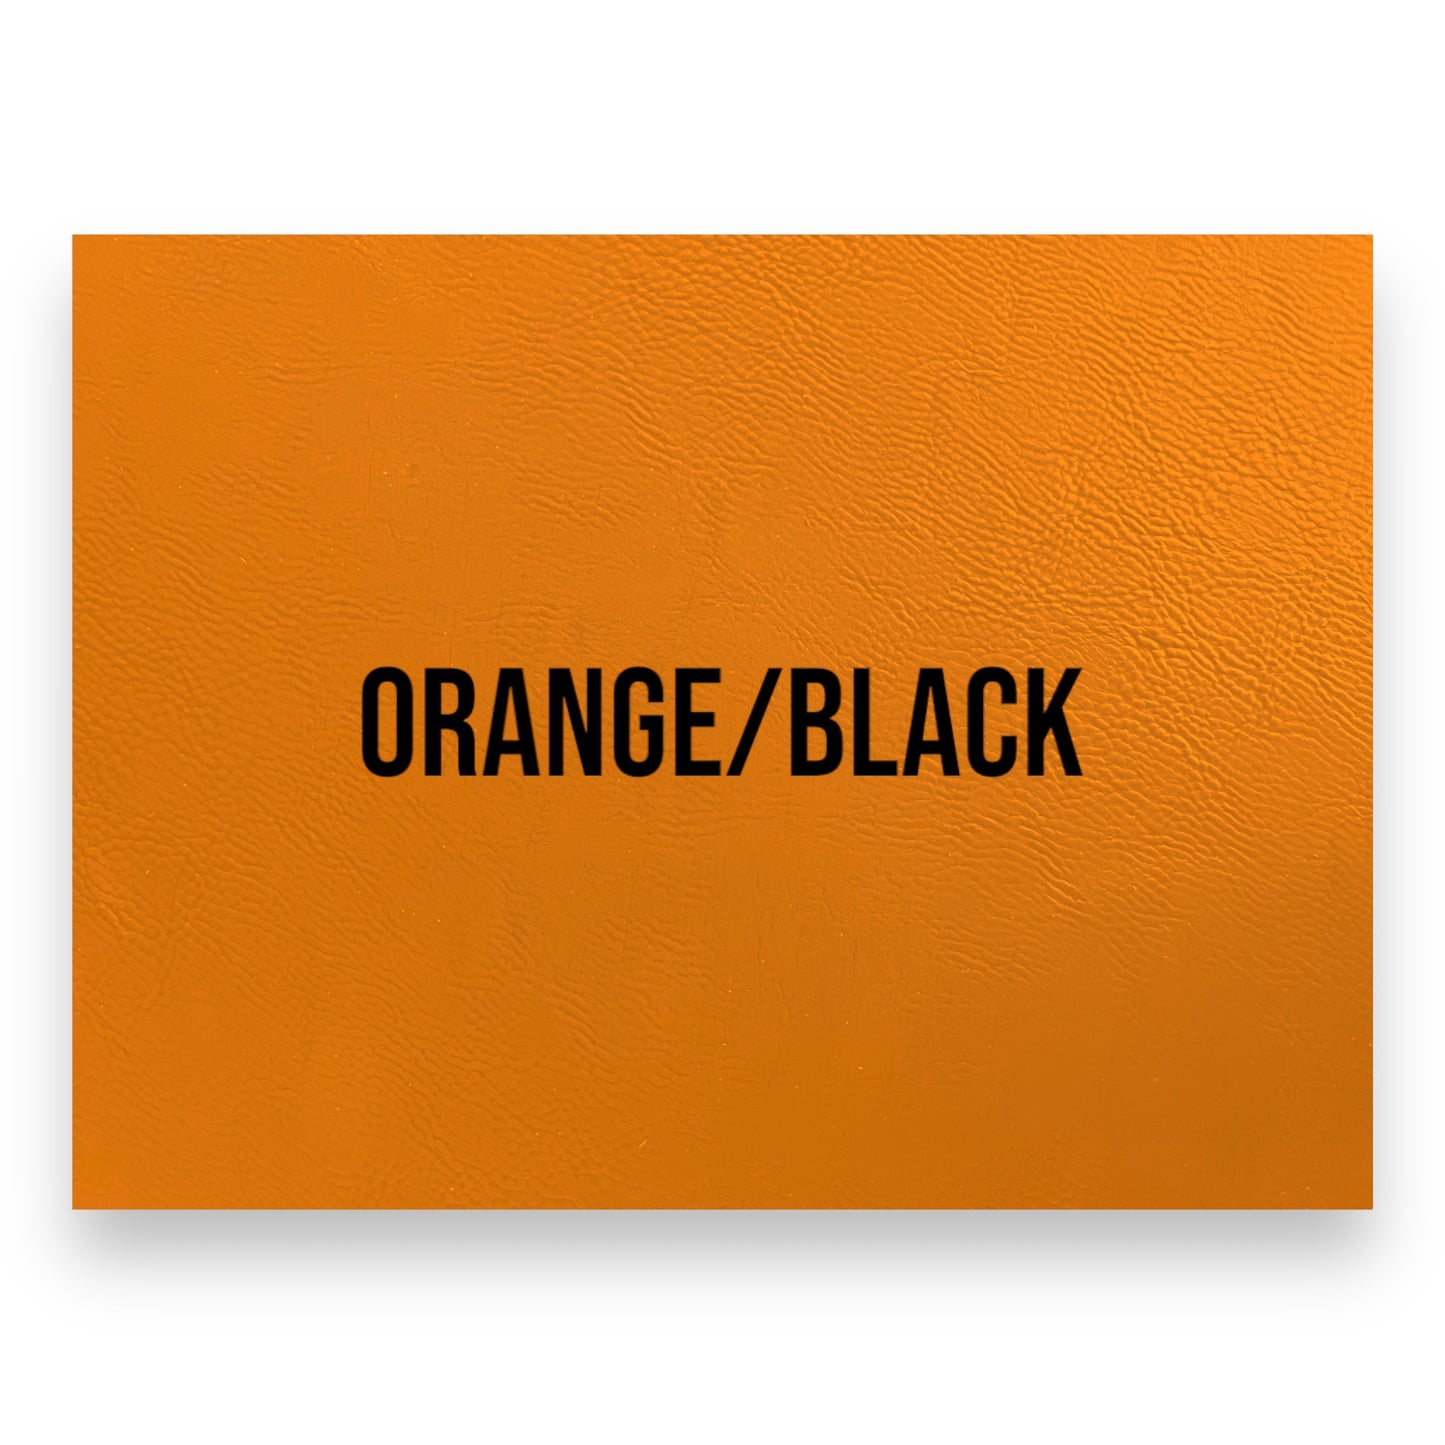 ORANGE/BLACK HYDBOND LEATHERETTE SHEET (12"x24")